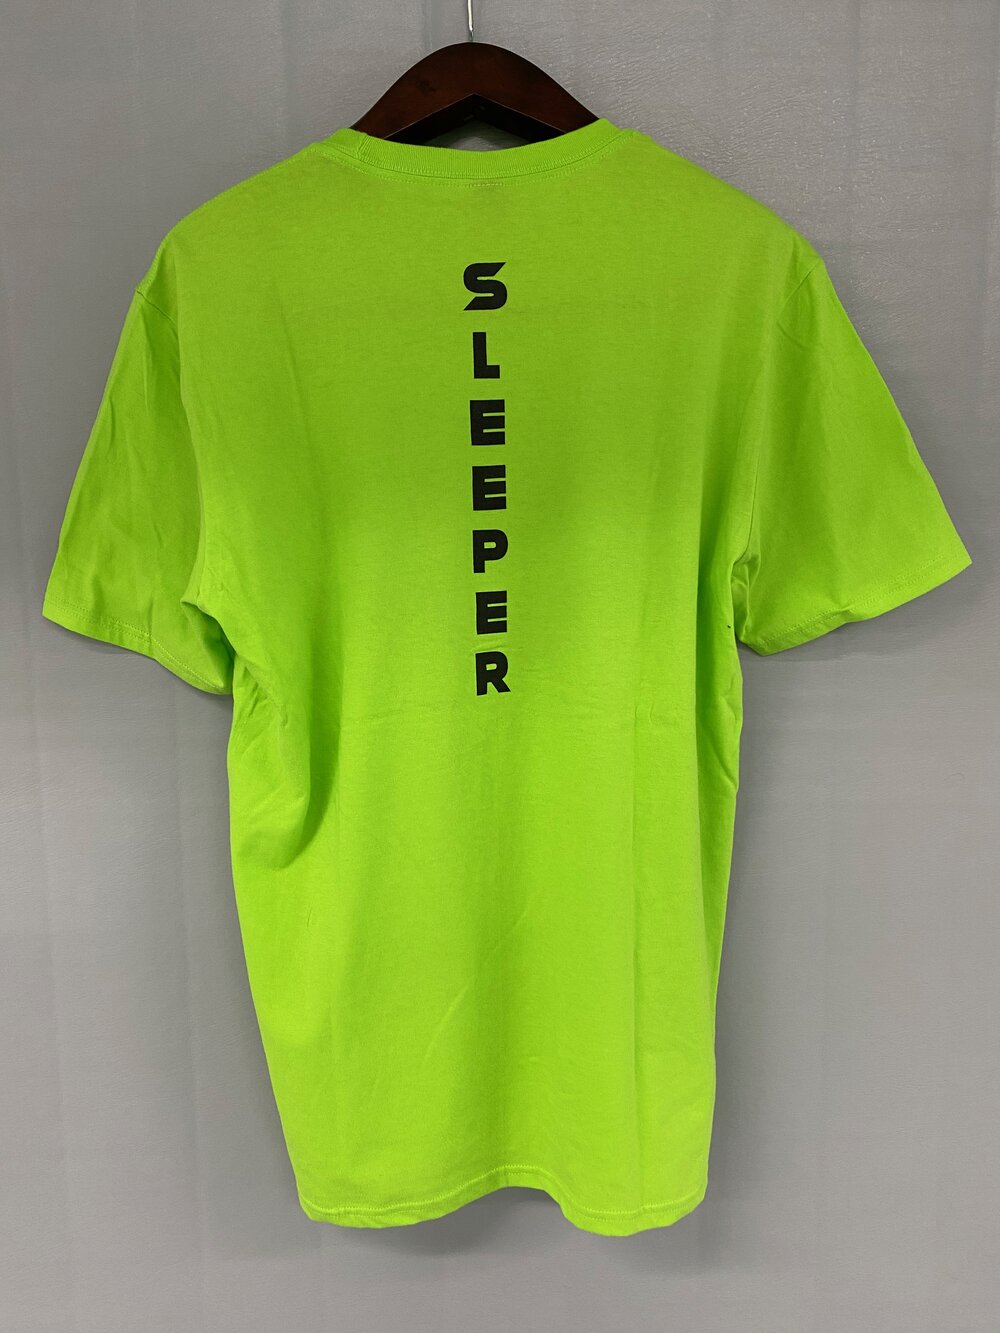 Lima Tegenover Uitvoerder Sleeper Logo T-Shirt Lime Green with Black 2 Sided — SLEEPER JIU JITSU